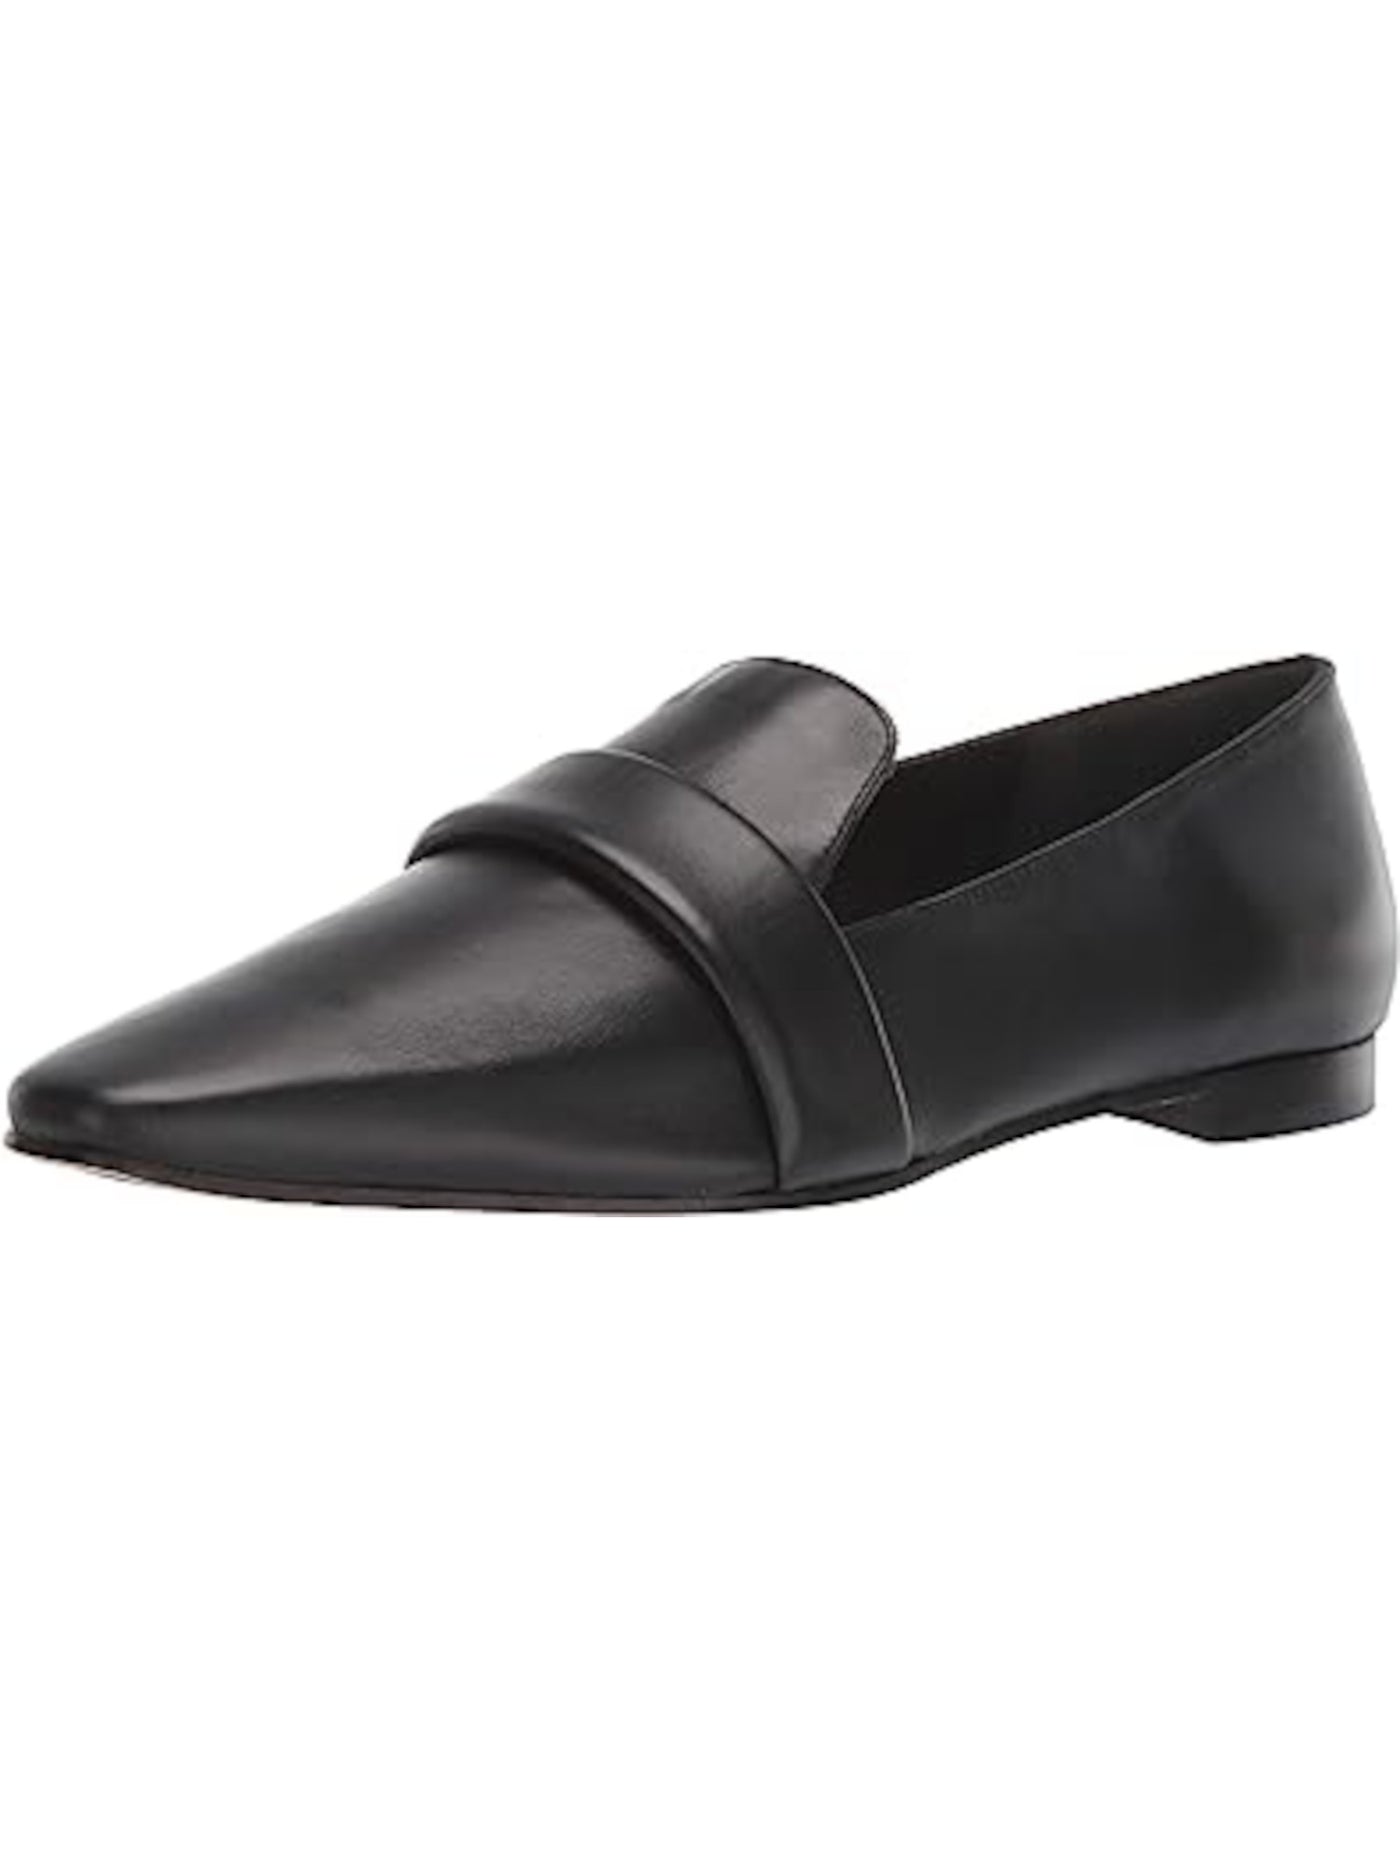 VIA SPIGA Womens Black Padded Adaline Square Toe Block Heel Slip On Leather Loafers Shoes 6.5 M